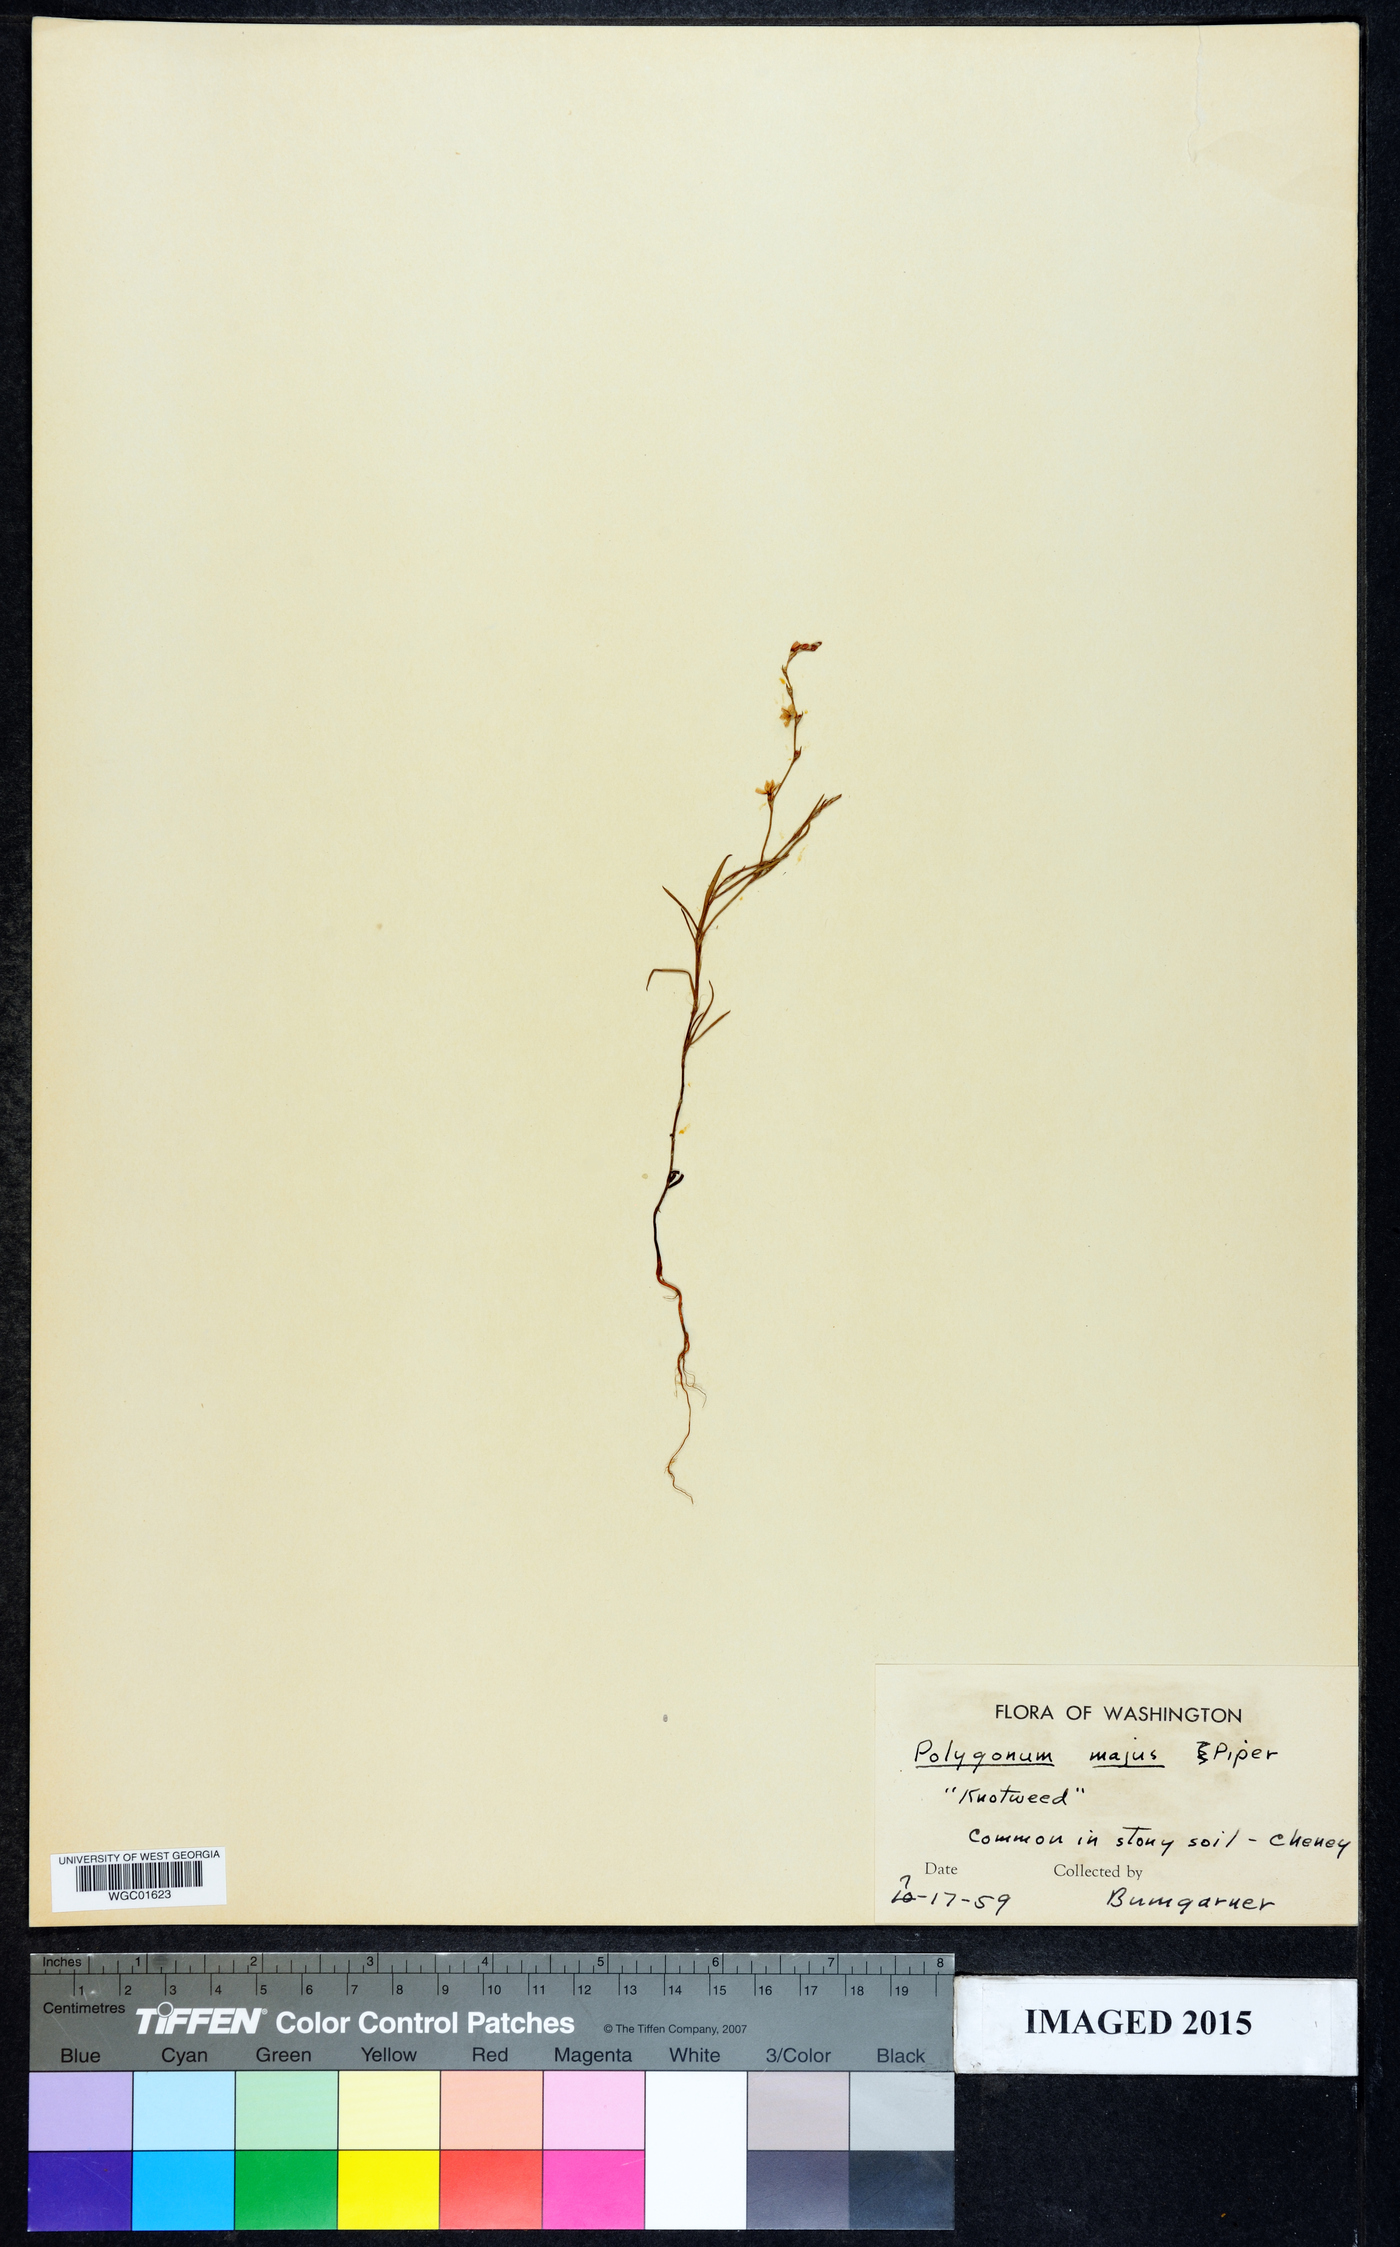 Polygonum douglasii subsp. majus image